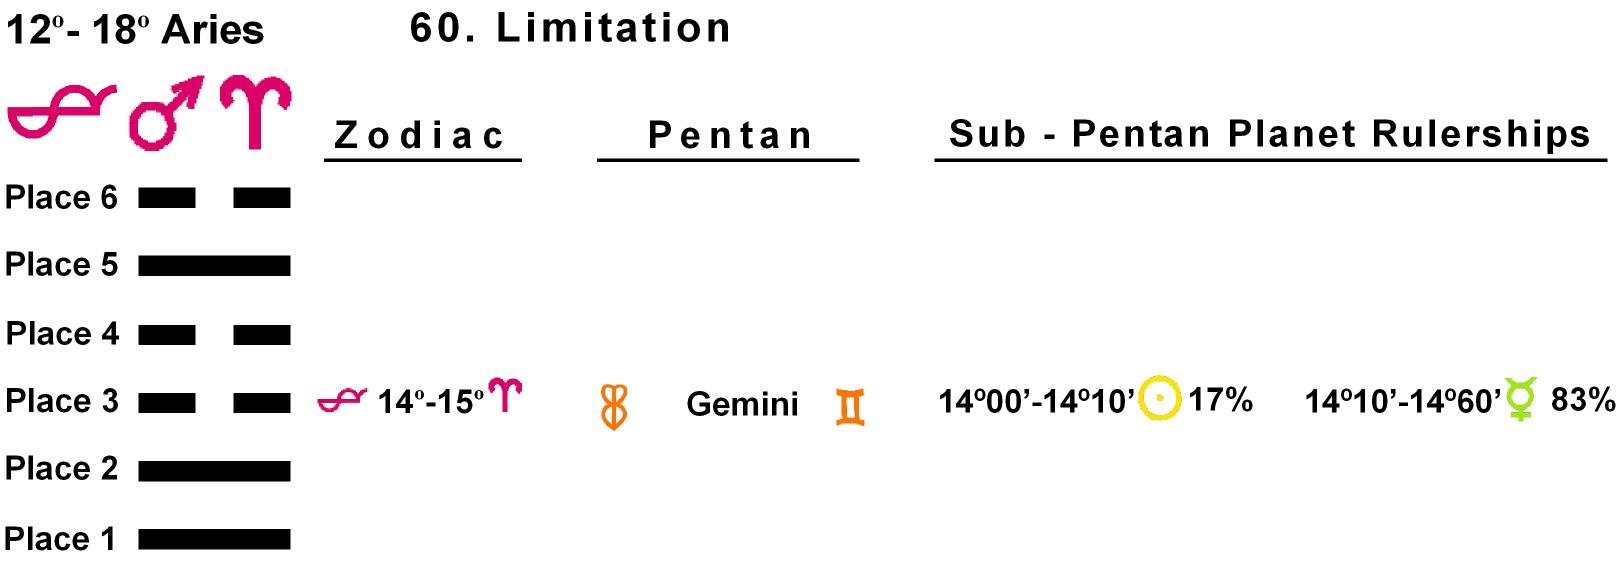 Pent-lines-01AR 14-15 Hx-60 Limitation